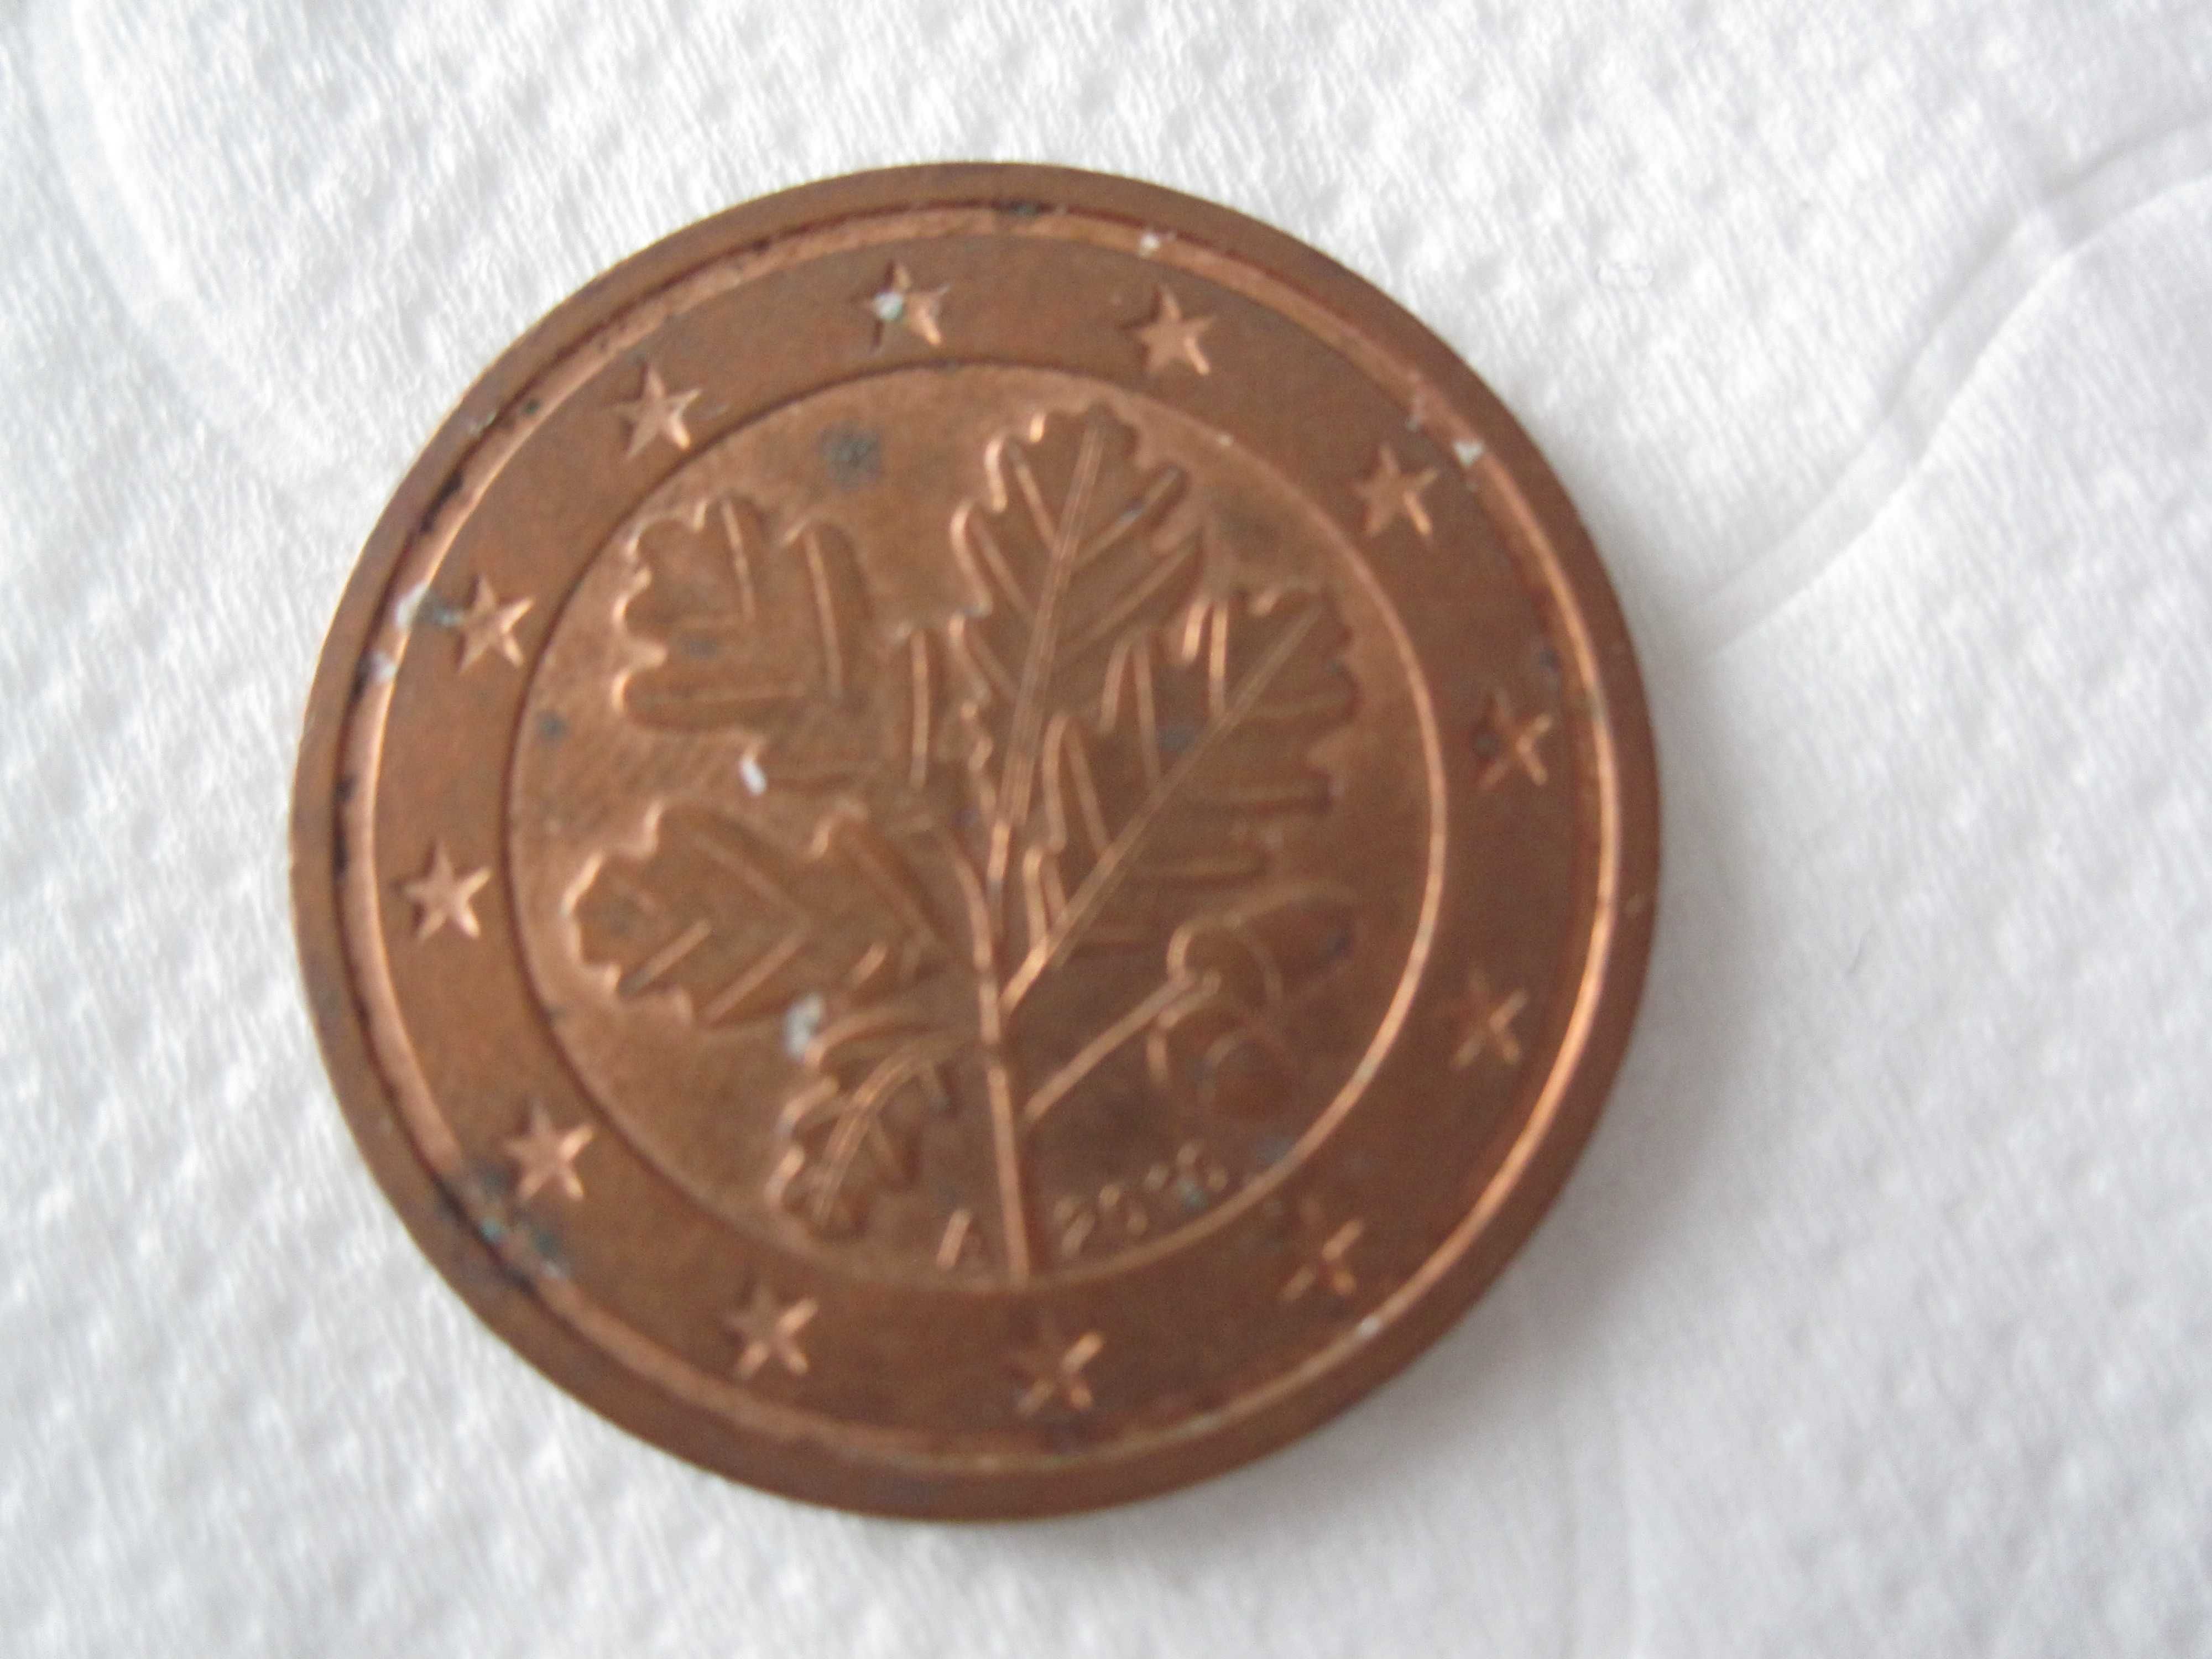 2 euro cent - Berlin, Niemcy - 2010 rok